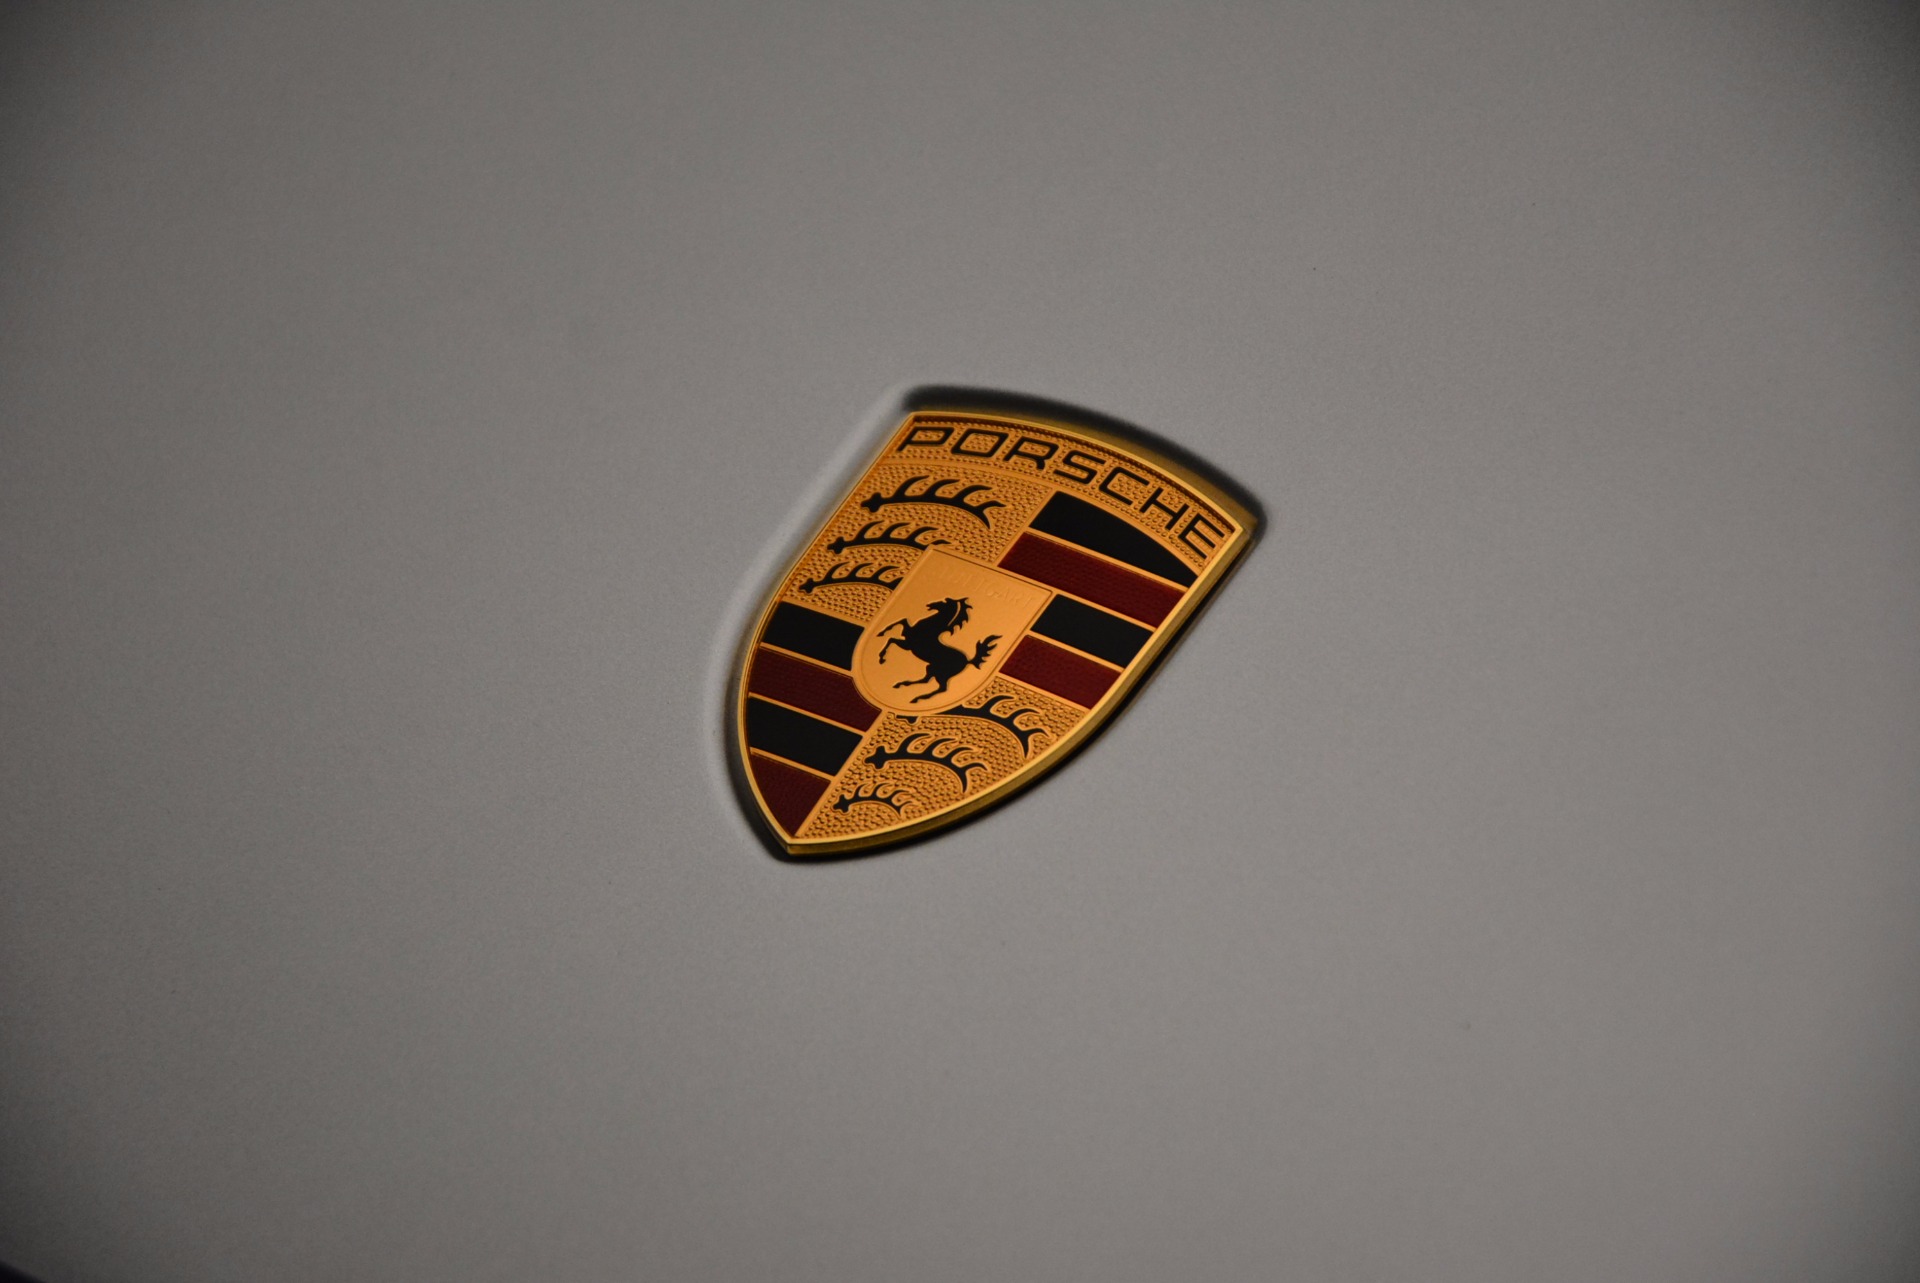 Used 2016 Porsche Cayenne Turbo